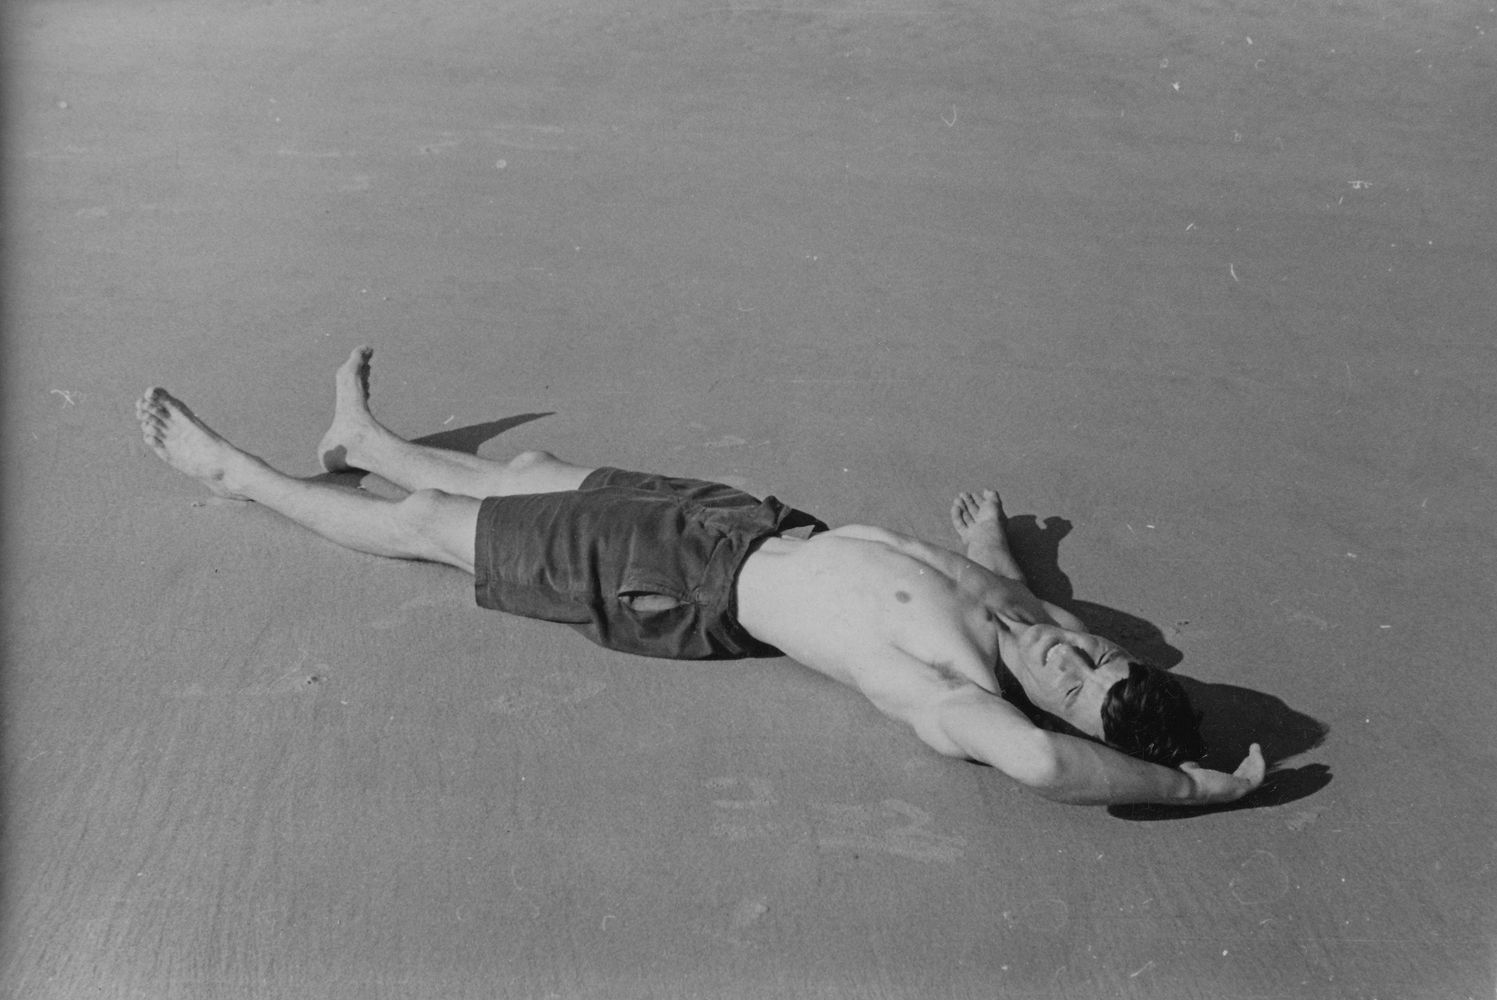 Male figure in bathing shorts lying on beach [P58]